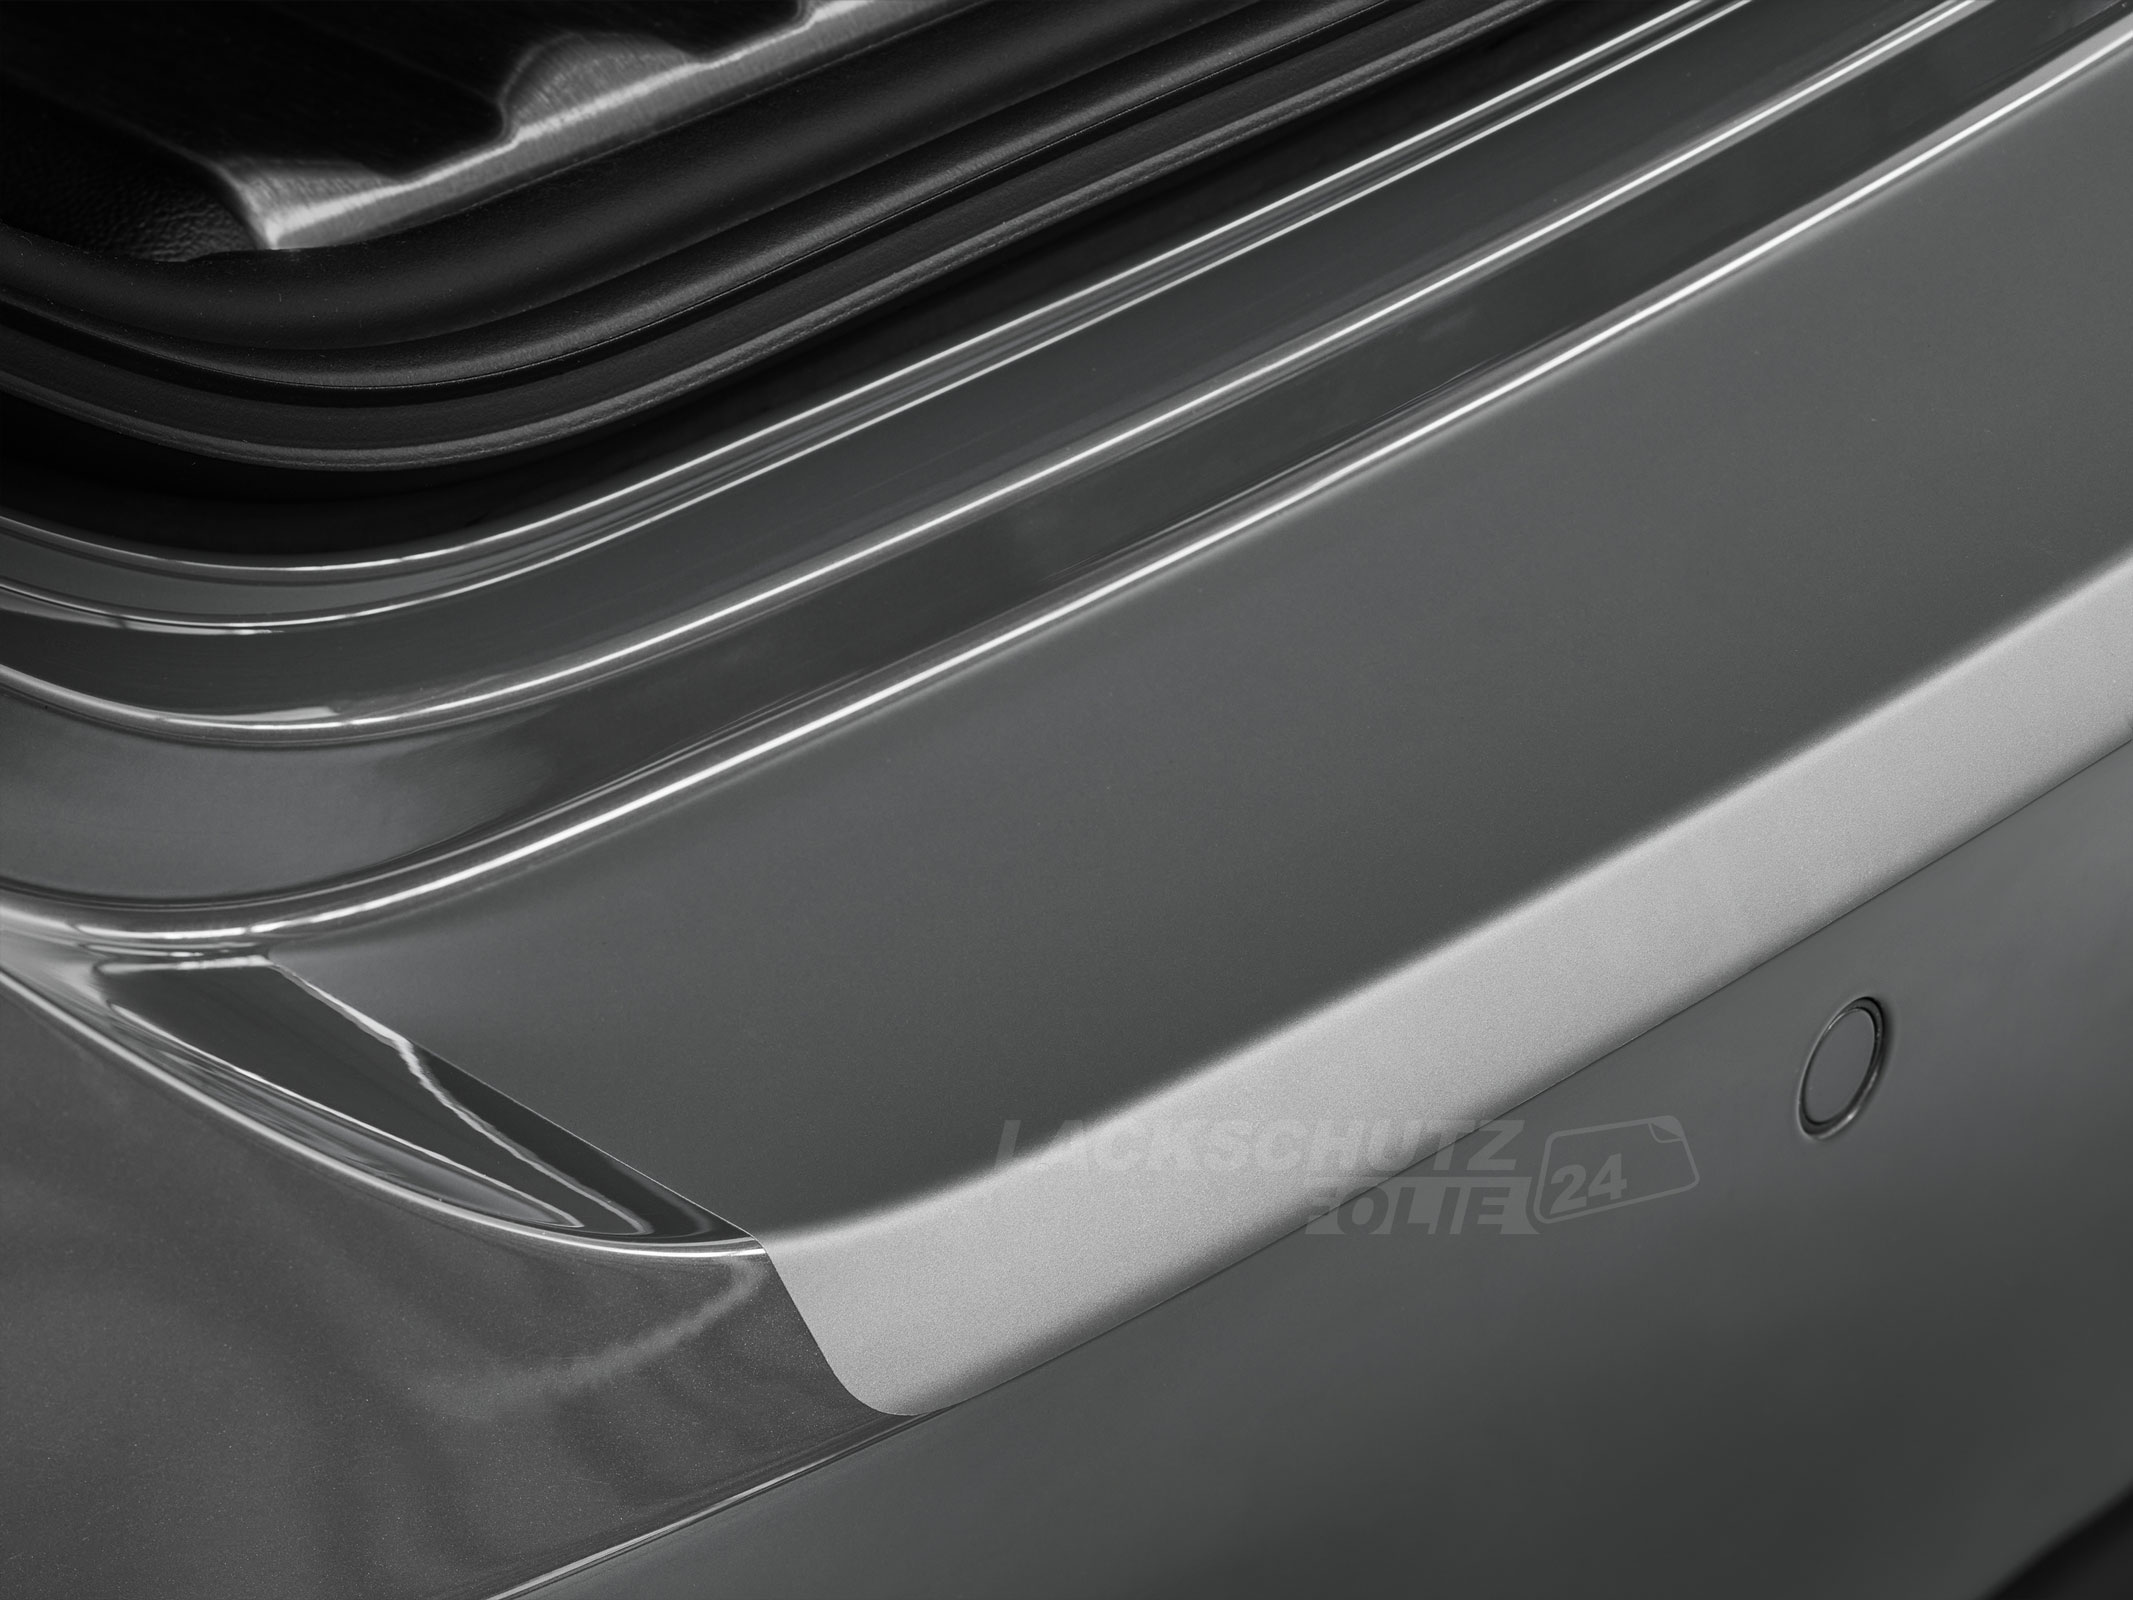 Ladekantenschutzfolie - Transparent Glatt MATT 110 µm stark  für Subaru Forester (V) Typ S5, BJ 03/2018